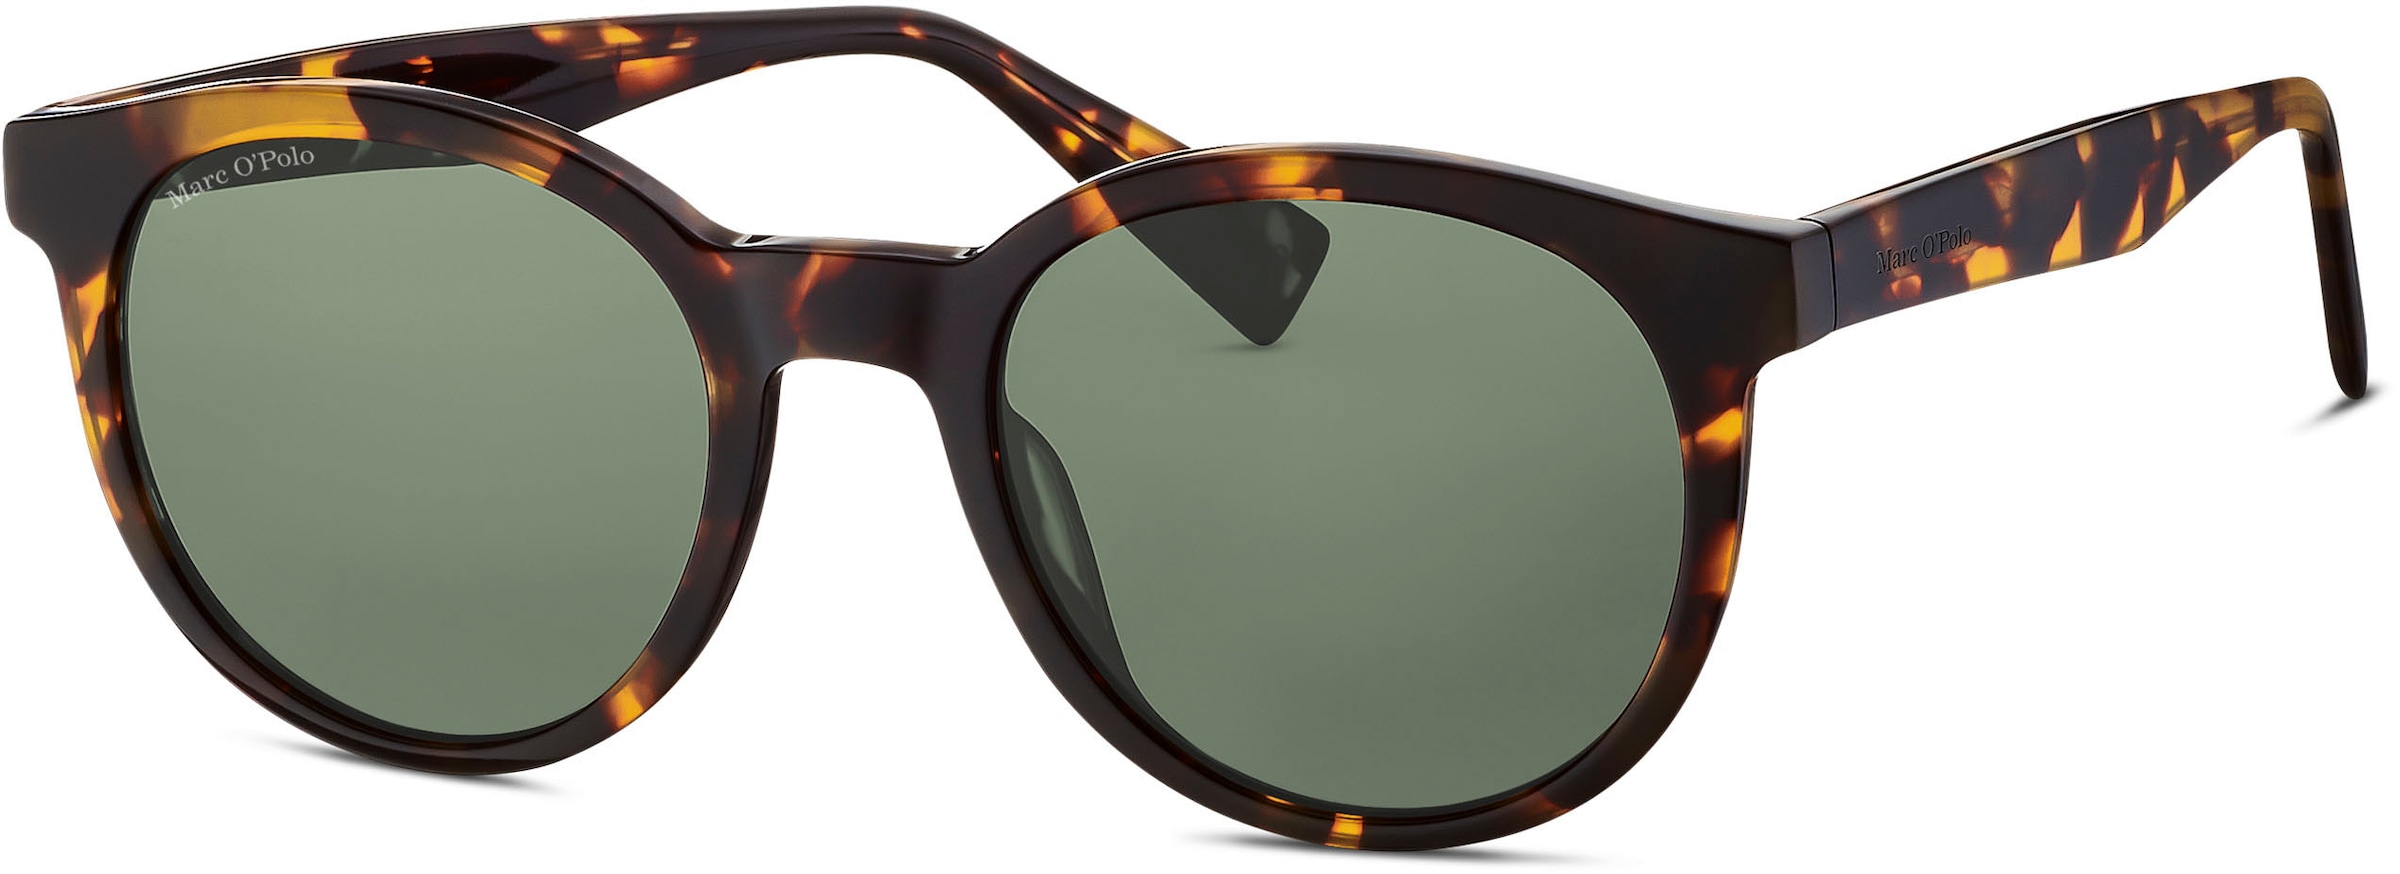 Marc O\'Polo Sonnenbrille »Modell 506185«, Panto-Form online kaufen | Sonnenbrillen